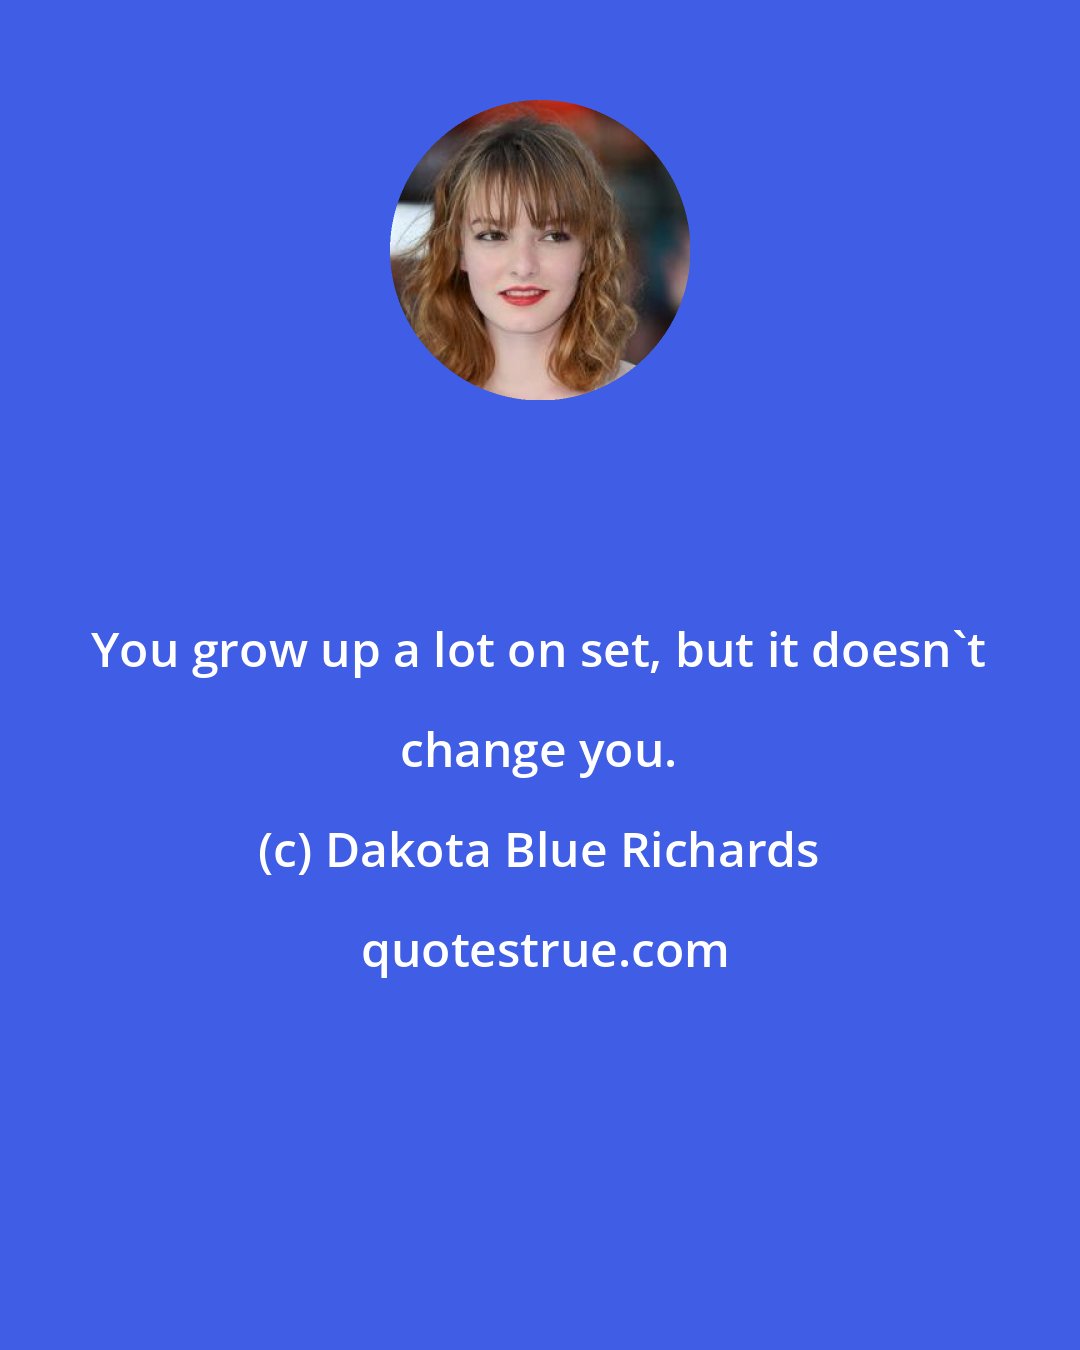 Dakota Blue Richards: You grow up a lot on set, but it doesn't change you.